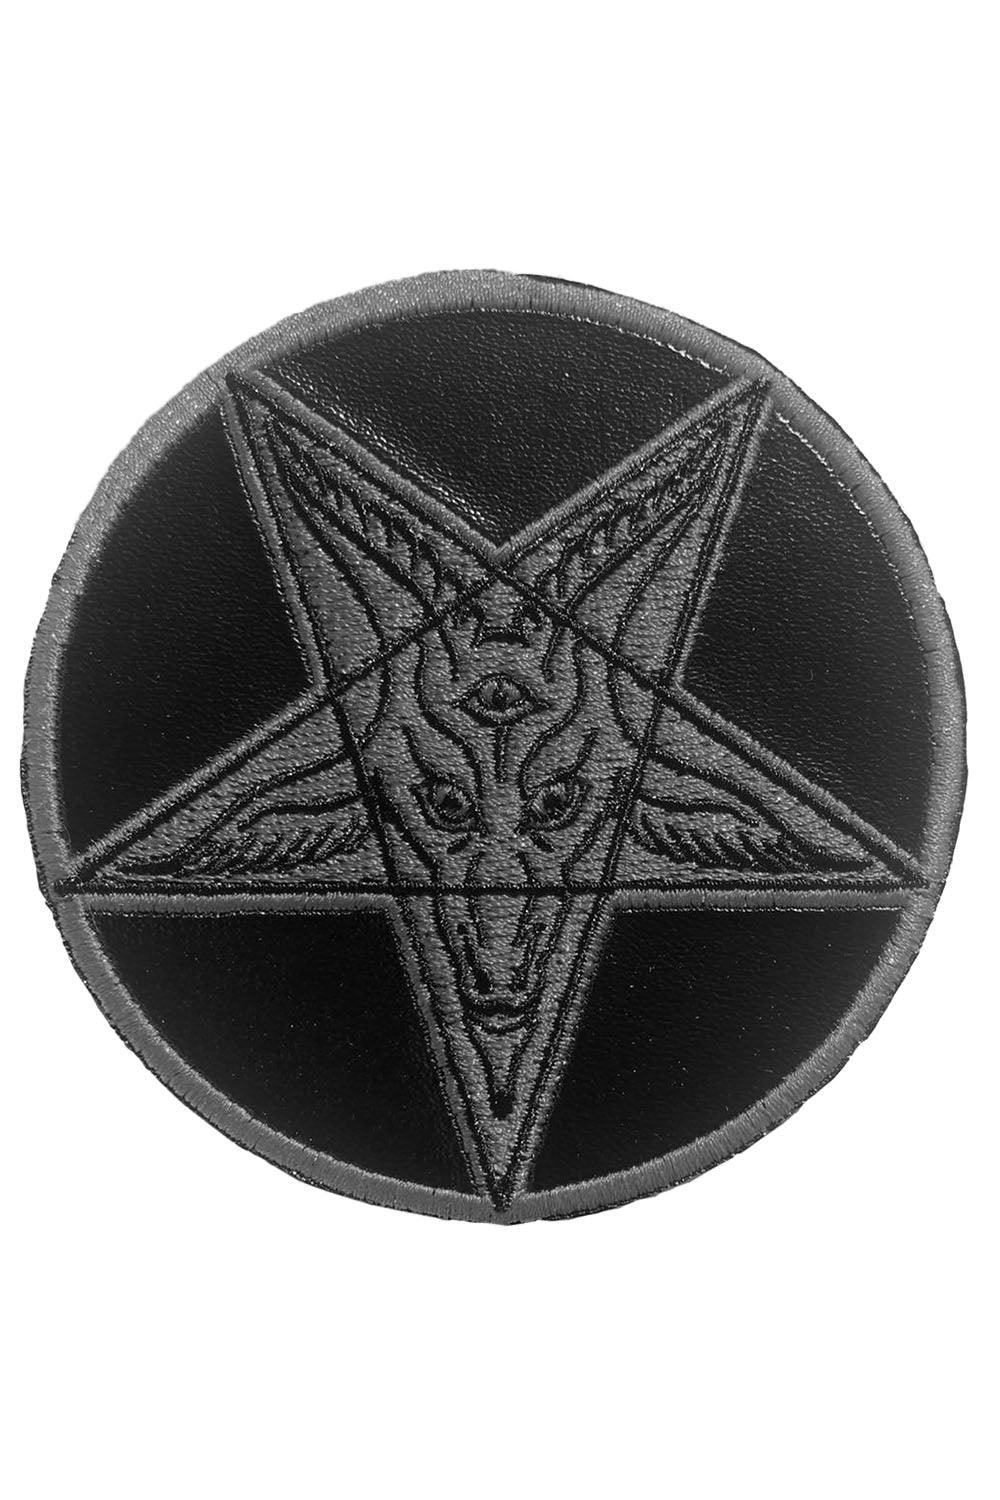 Kreepsville Black Faux Leather Satanic Patch - VampireFreaks